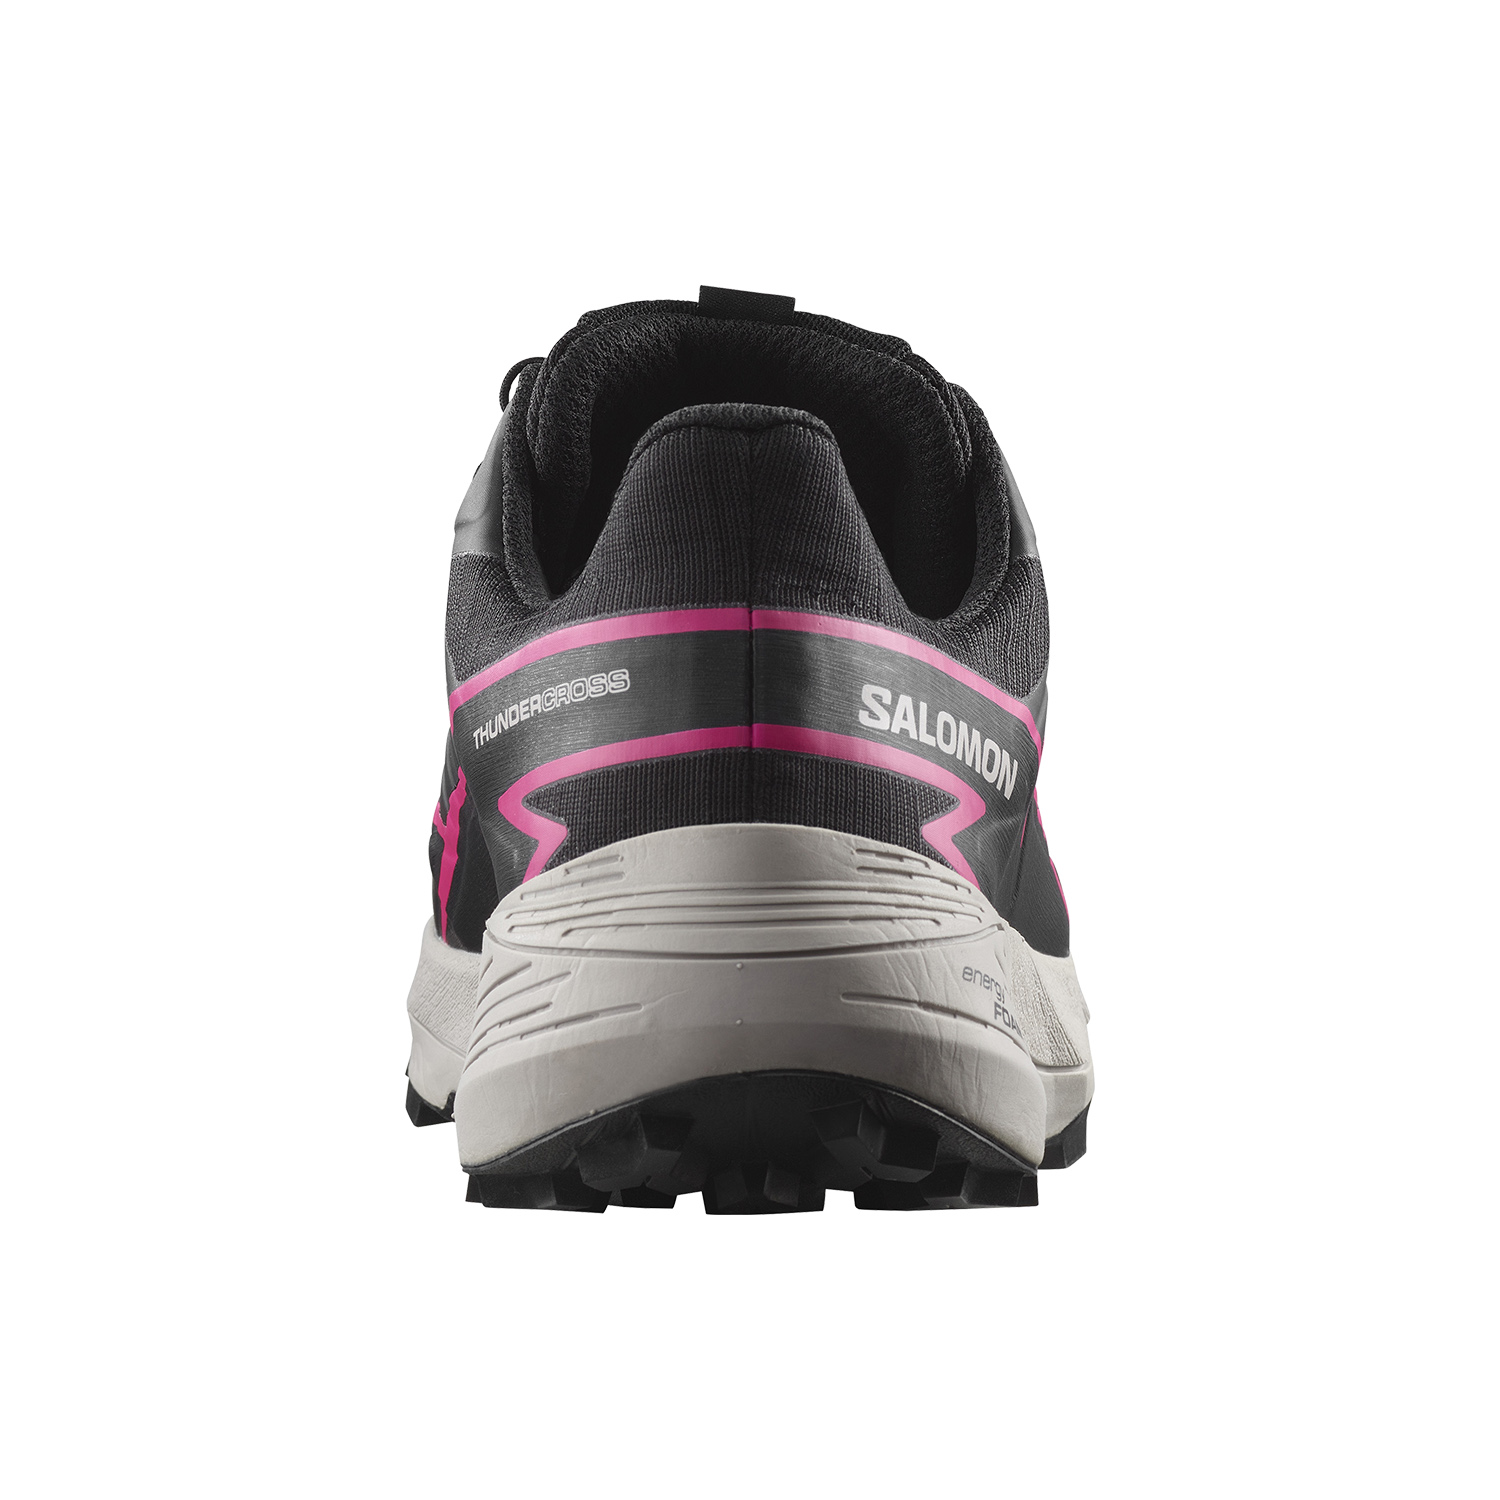 Salomon Thundercross GTX - Black/Pink Glo